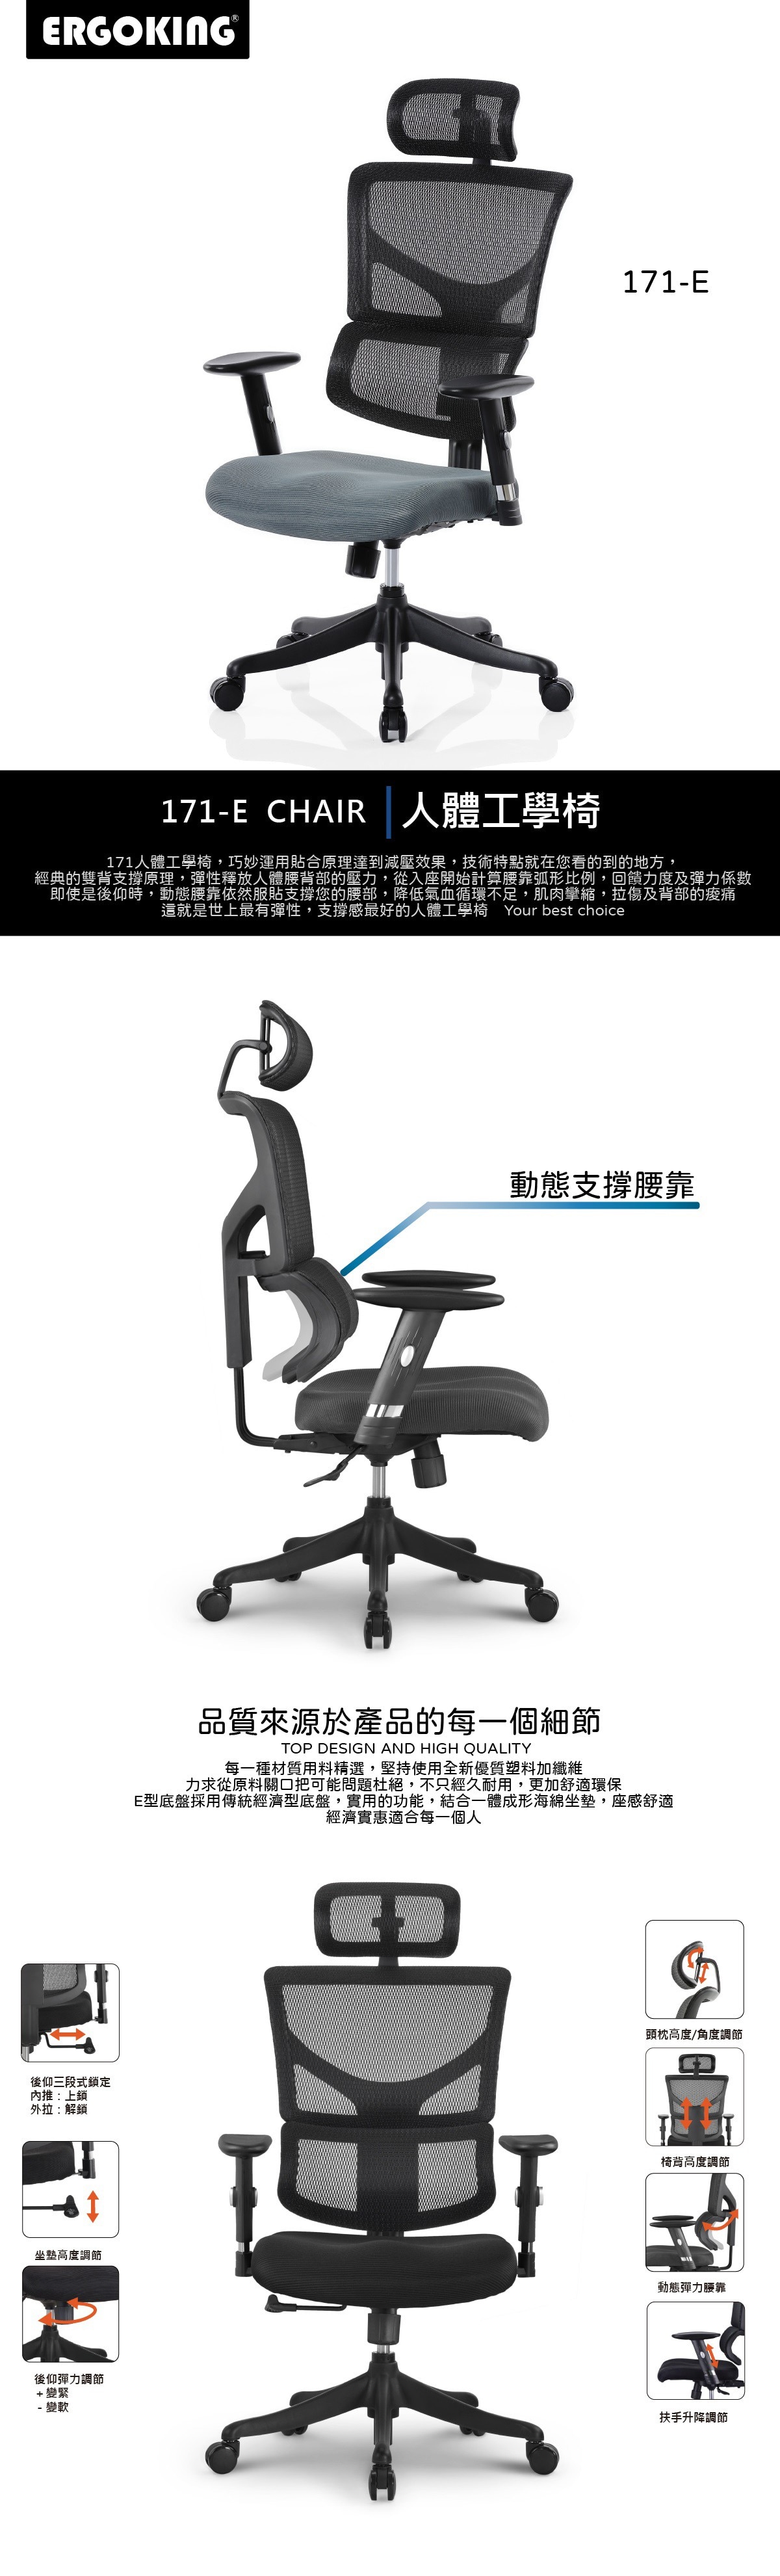 Ergoking 171-E 人體工學椅超彈性雙背挺腰支撐系統，椅背高度四段式調節，一體成型太空坐墊，後仰四段式鎖定及彈力調節。